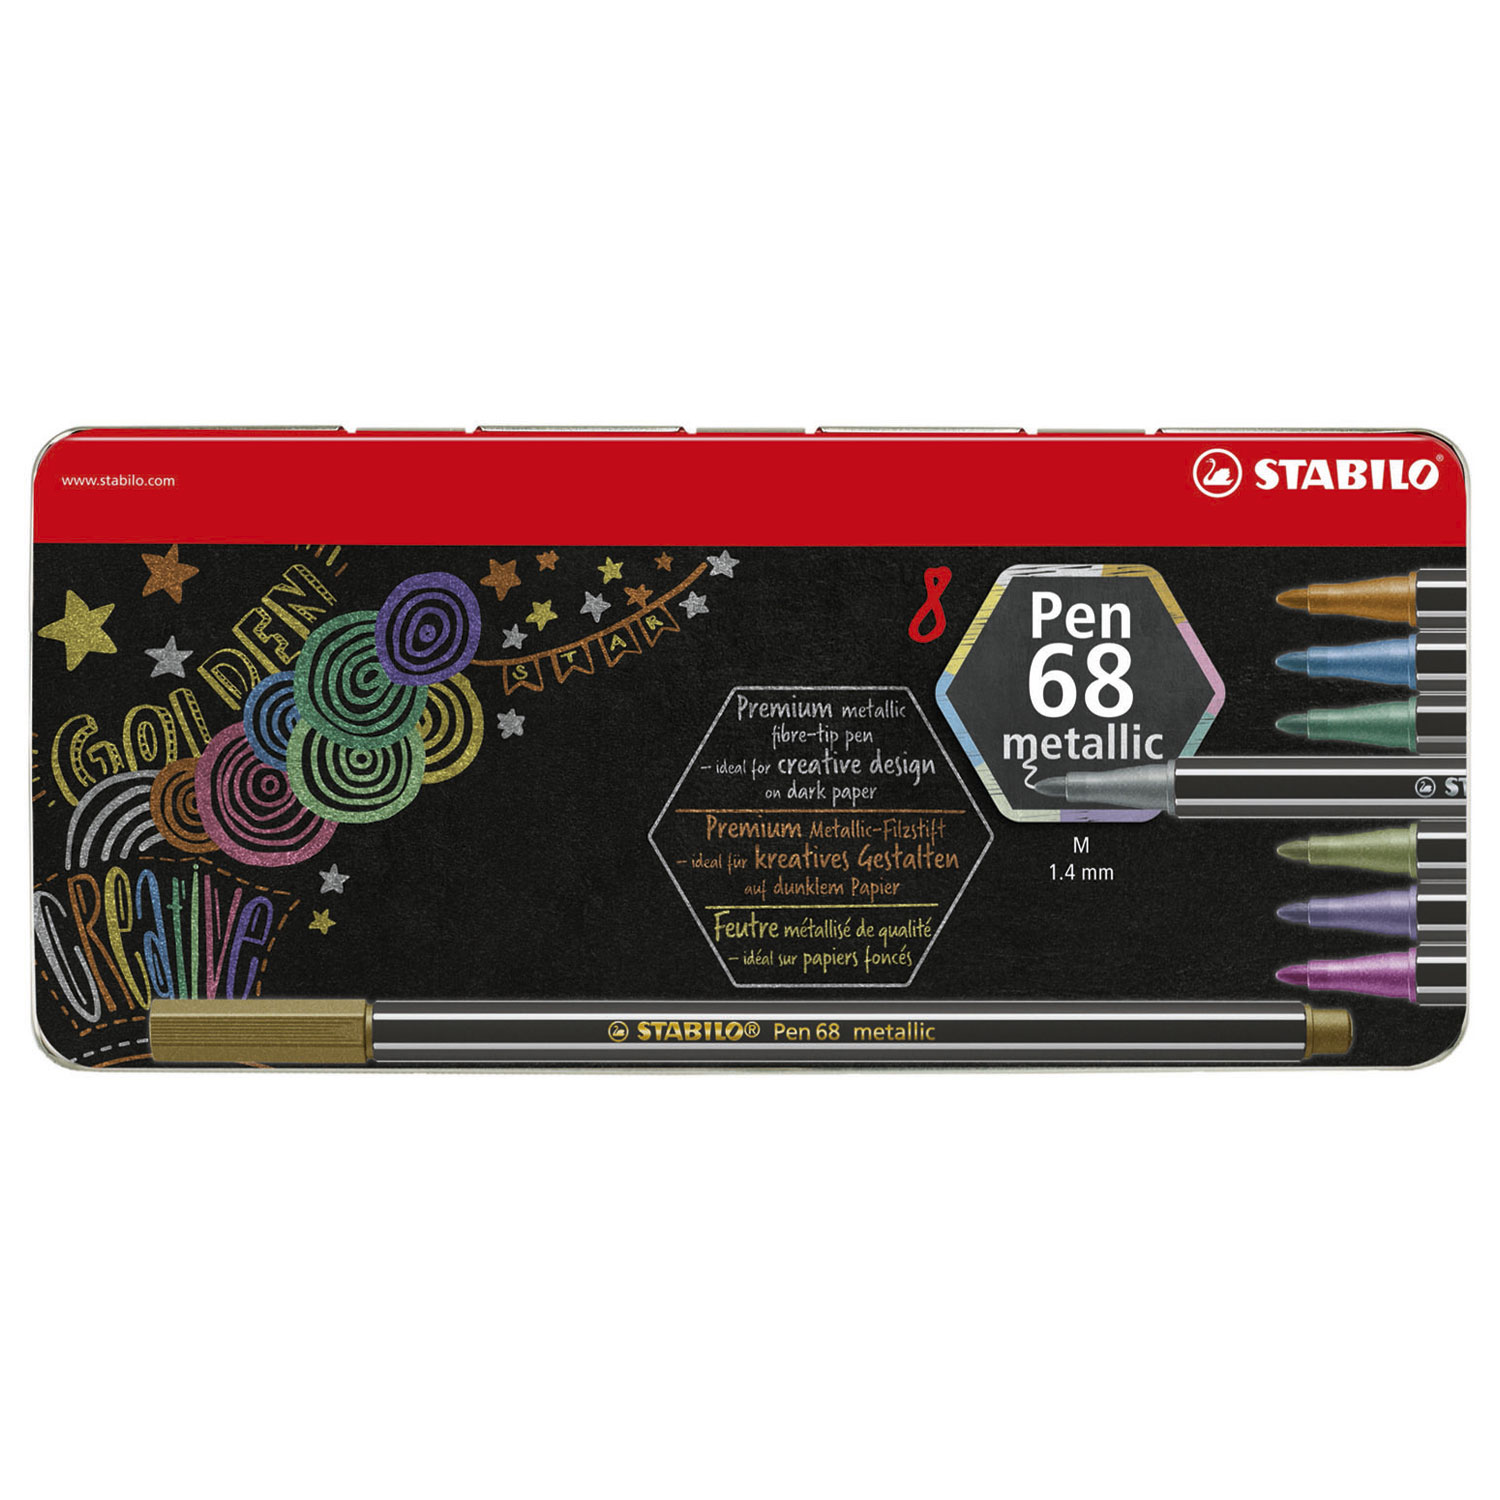 Stabilo Pen 68 Marker Set Metal Box Set of 50